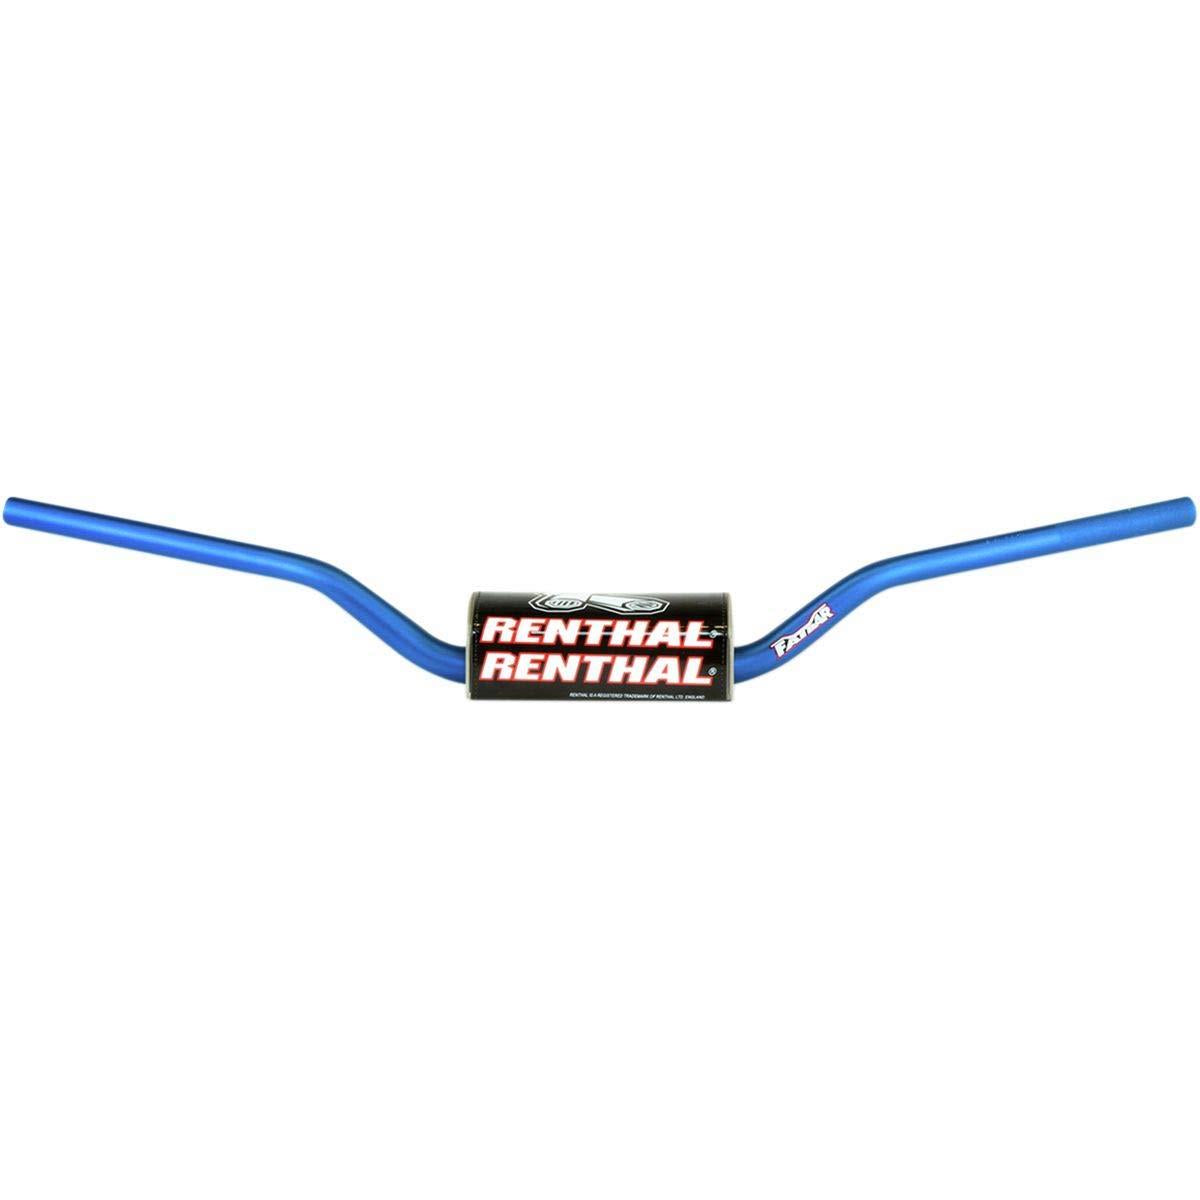 Renthal Fat Bar Fatbar Handlebars Honda 605-01 Blue Bend CR High/Ricky Johnson